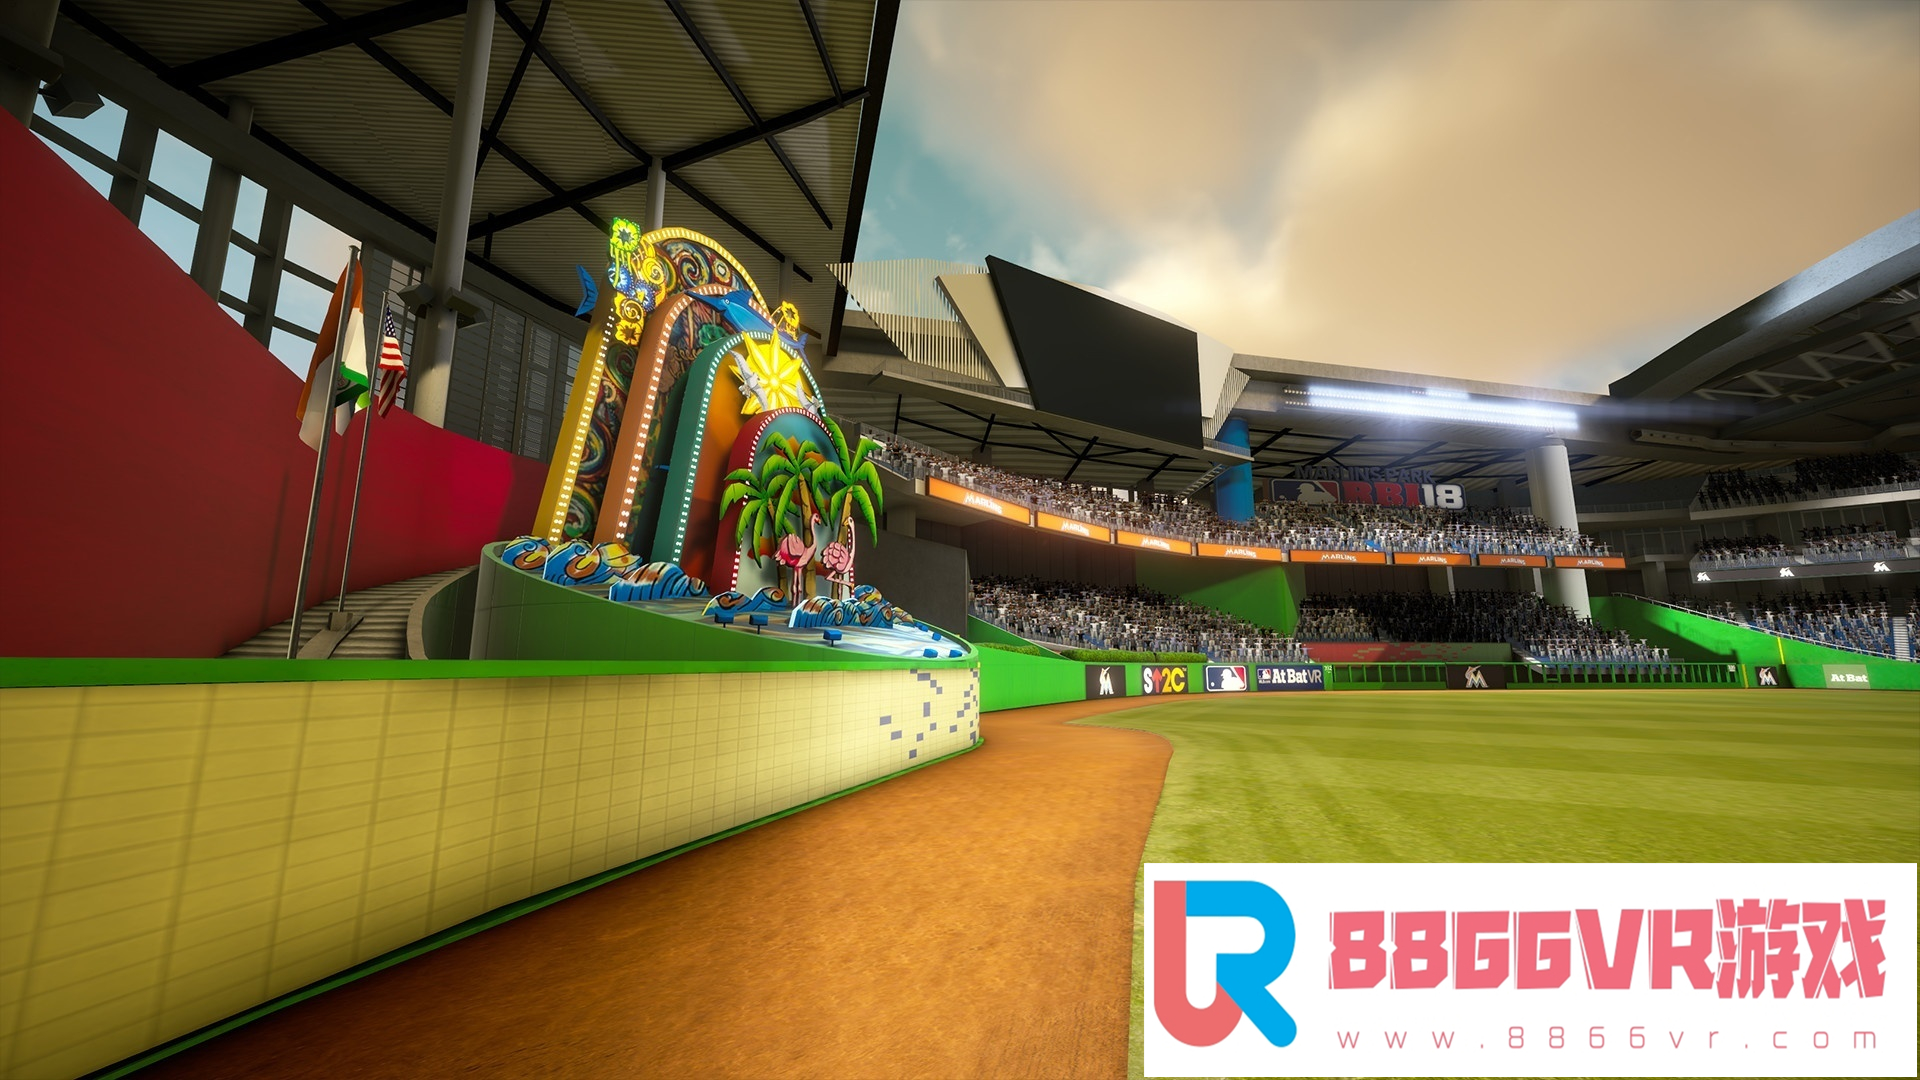 [VR交流学习] MLB本垒打 VR (MLB Home Run Derby VR) vr game crack3375 作者:蜡笔小猪 帖子ID:1098 破解